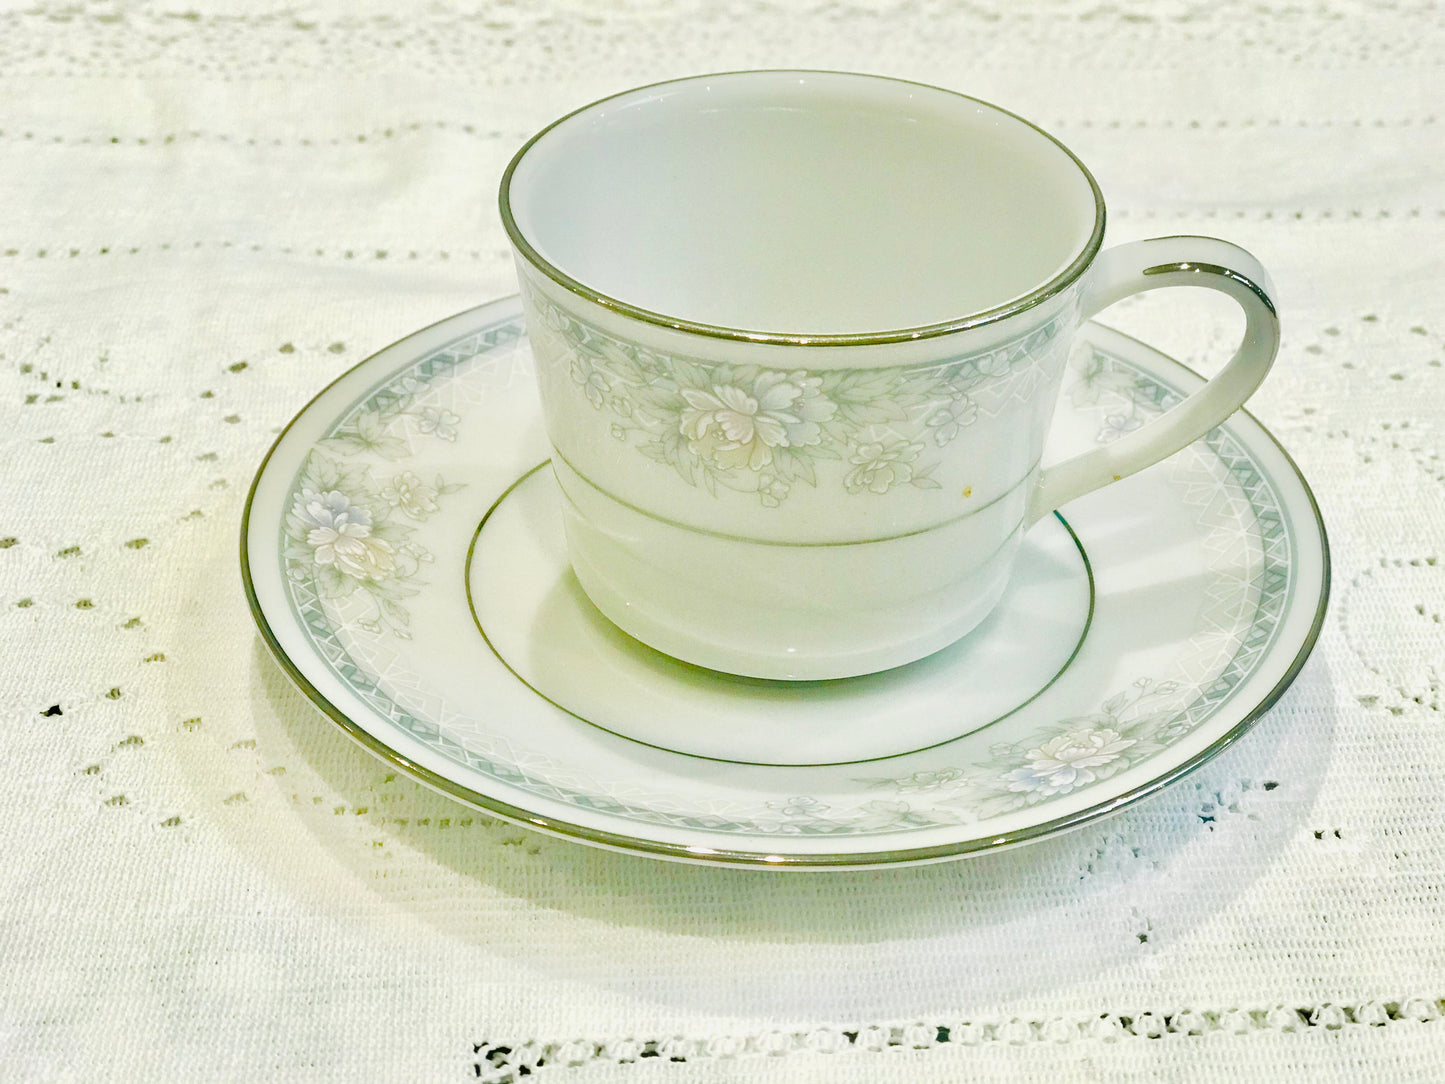 Noritake “Silk Garland” Coffee Cups & Saucers